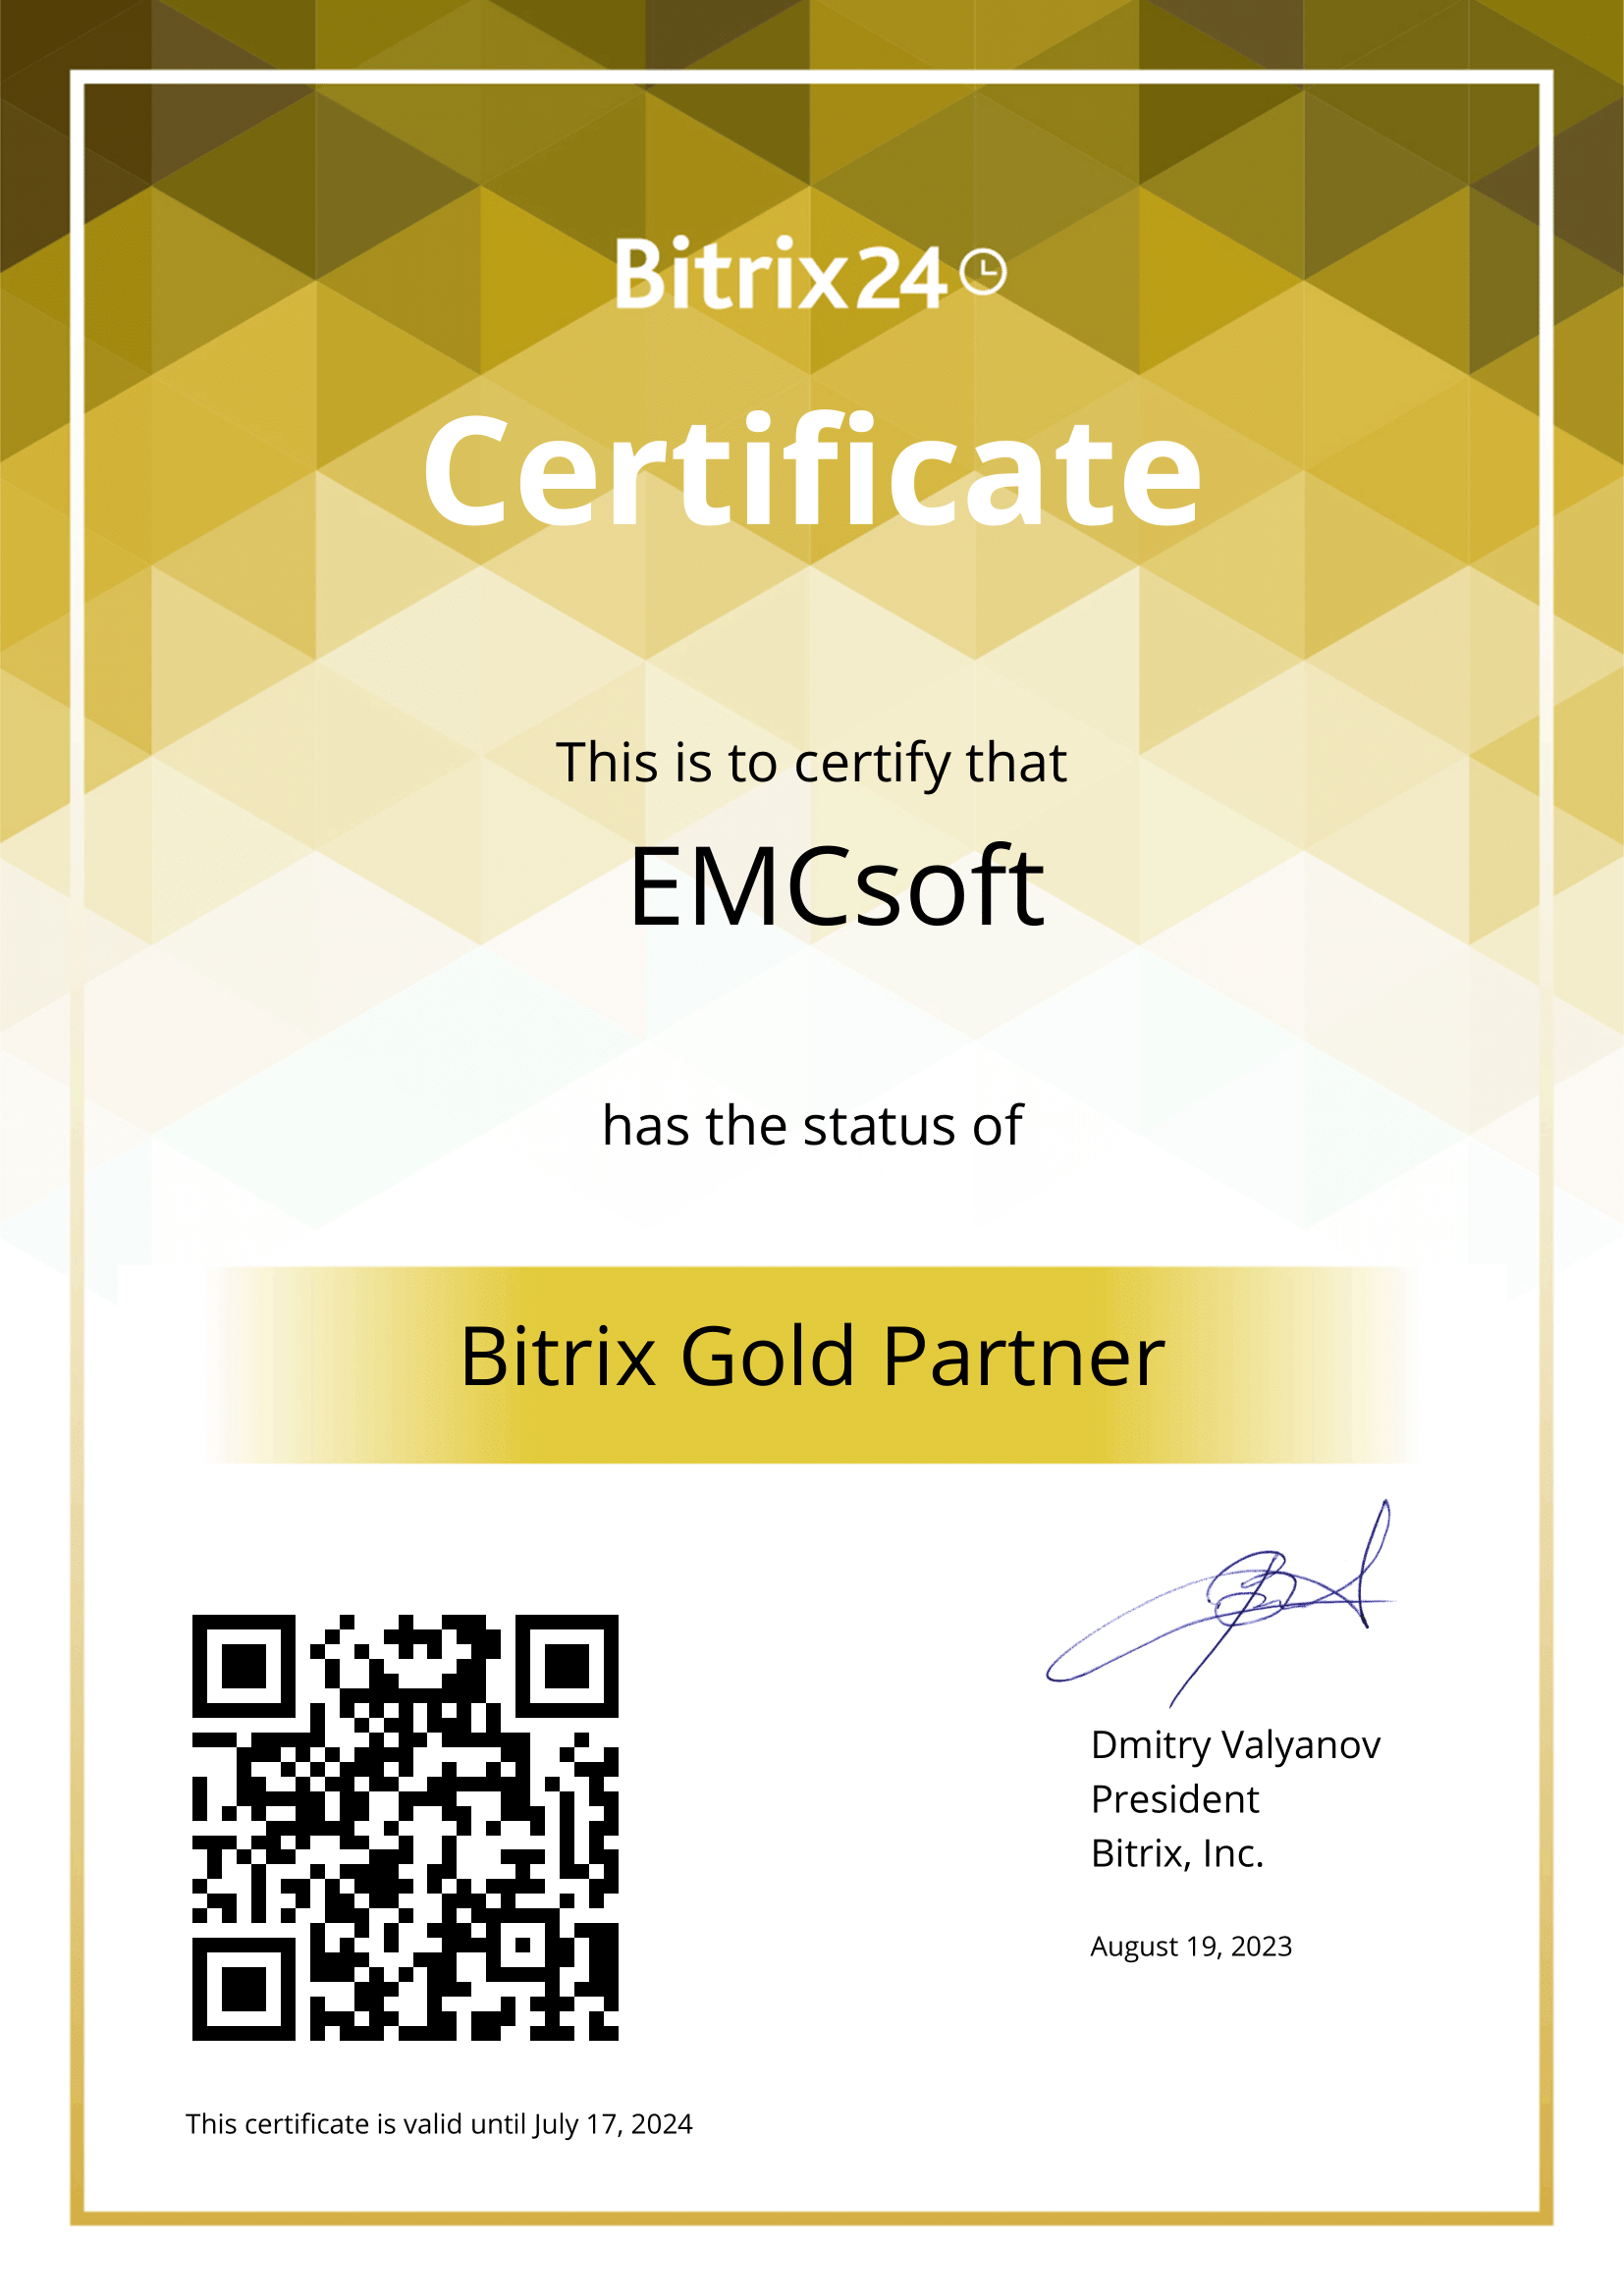 Bitrix24 Gold Partner Certificate